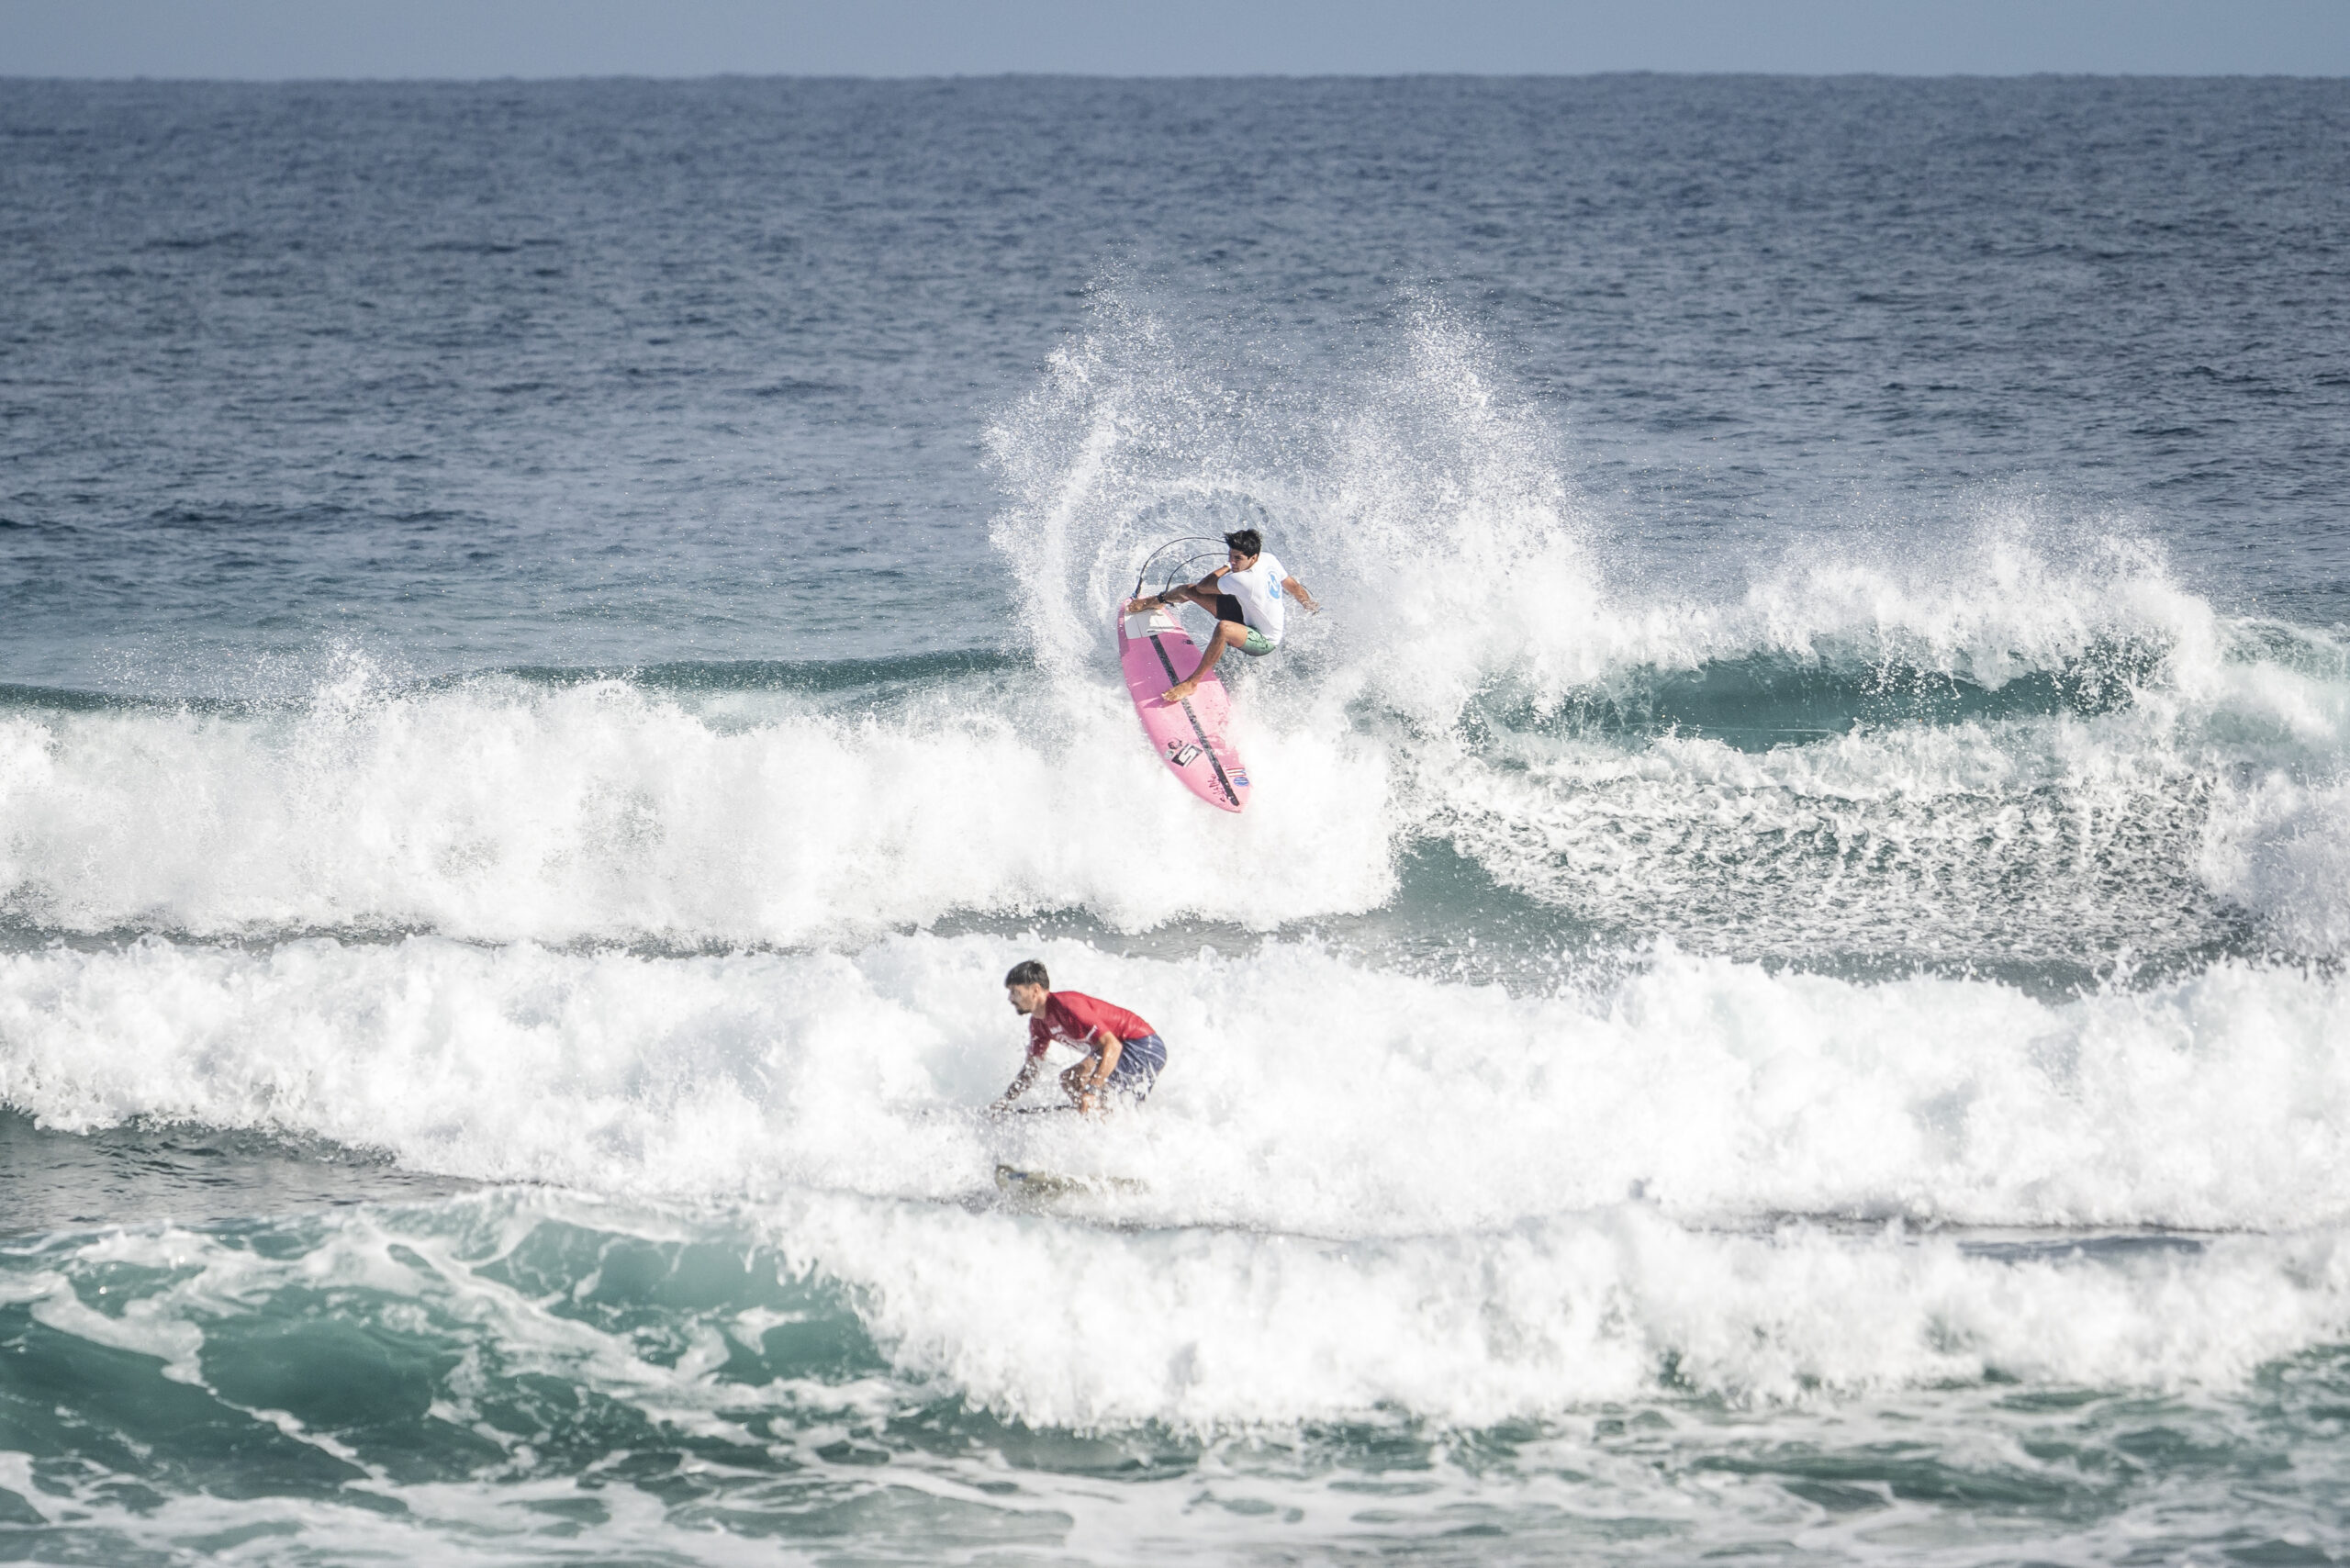 Siargao surfers dominate international surfing tilt